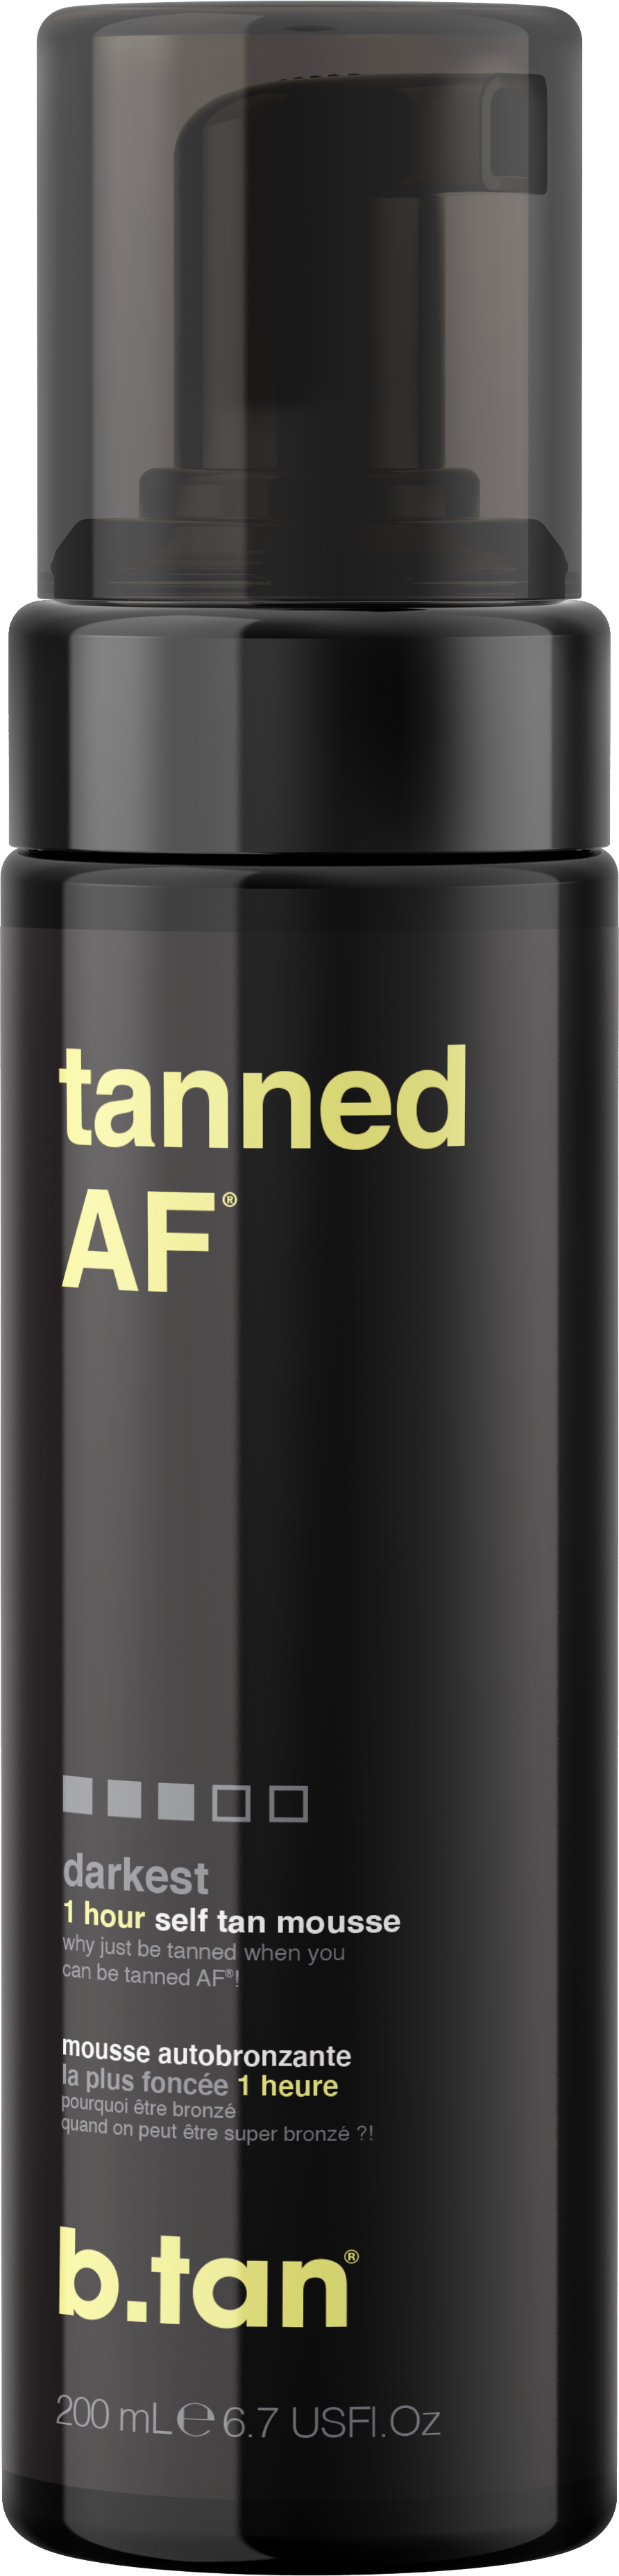 BTAN tanned AF - self tan mousse